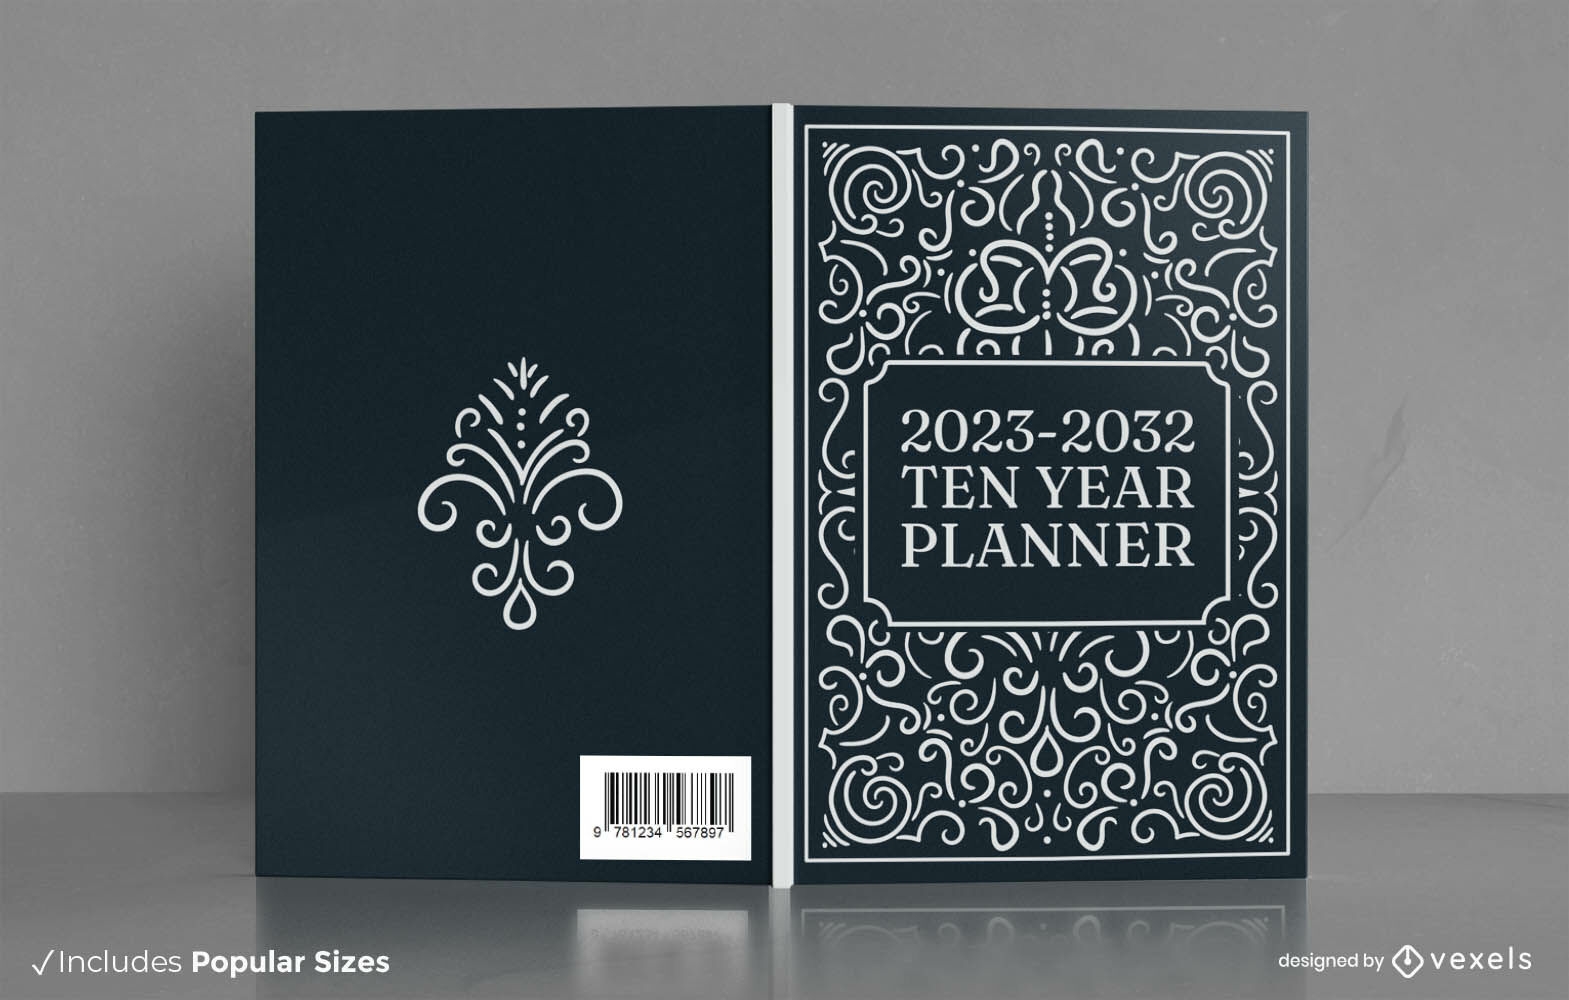 Ten year planner book cover design